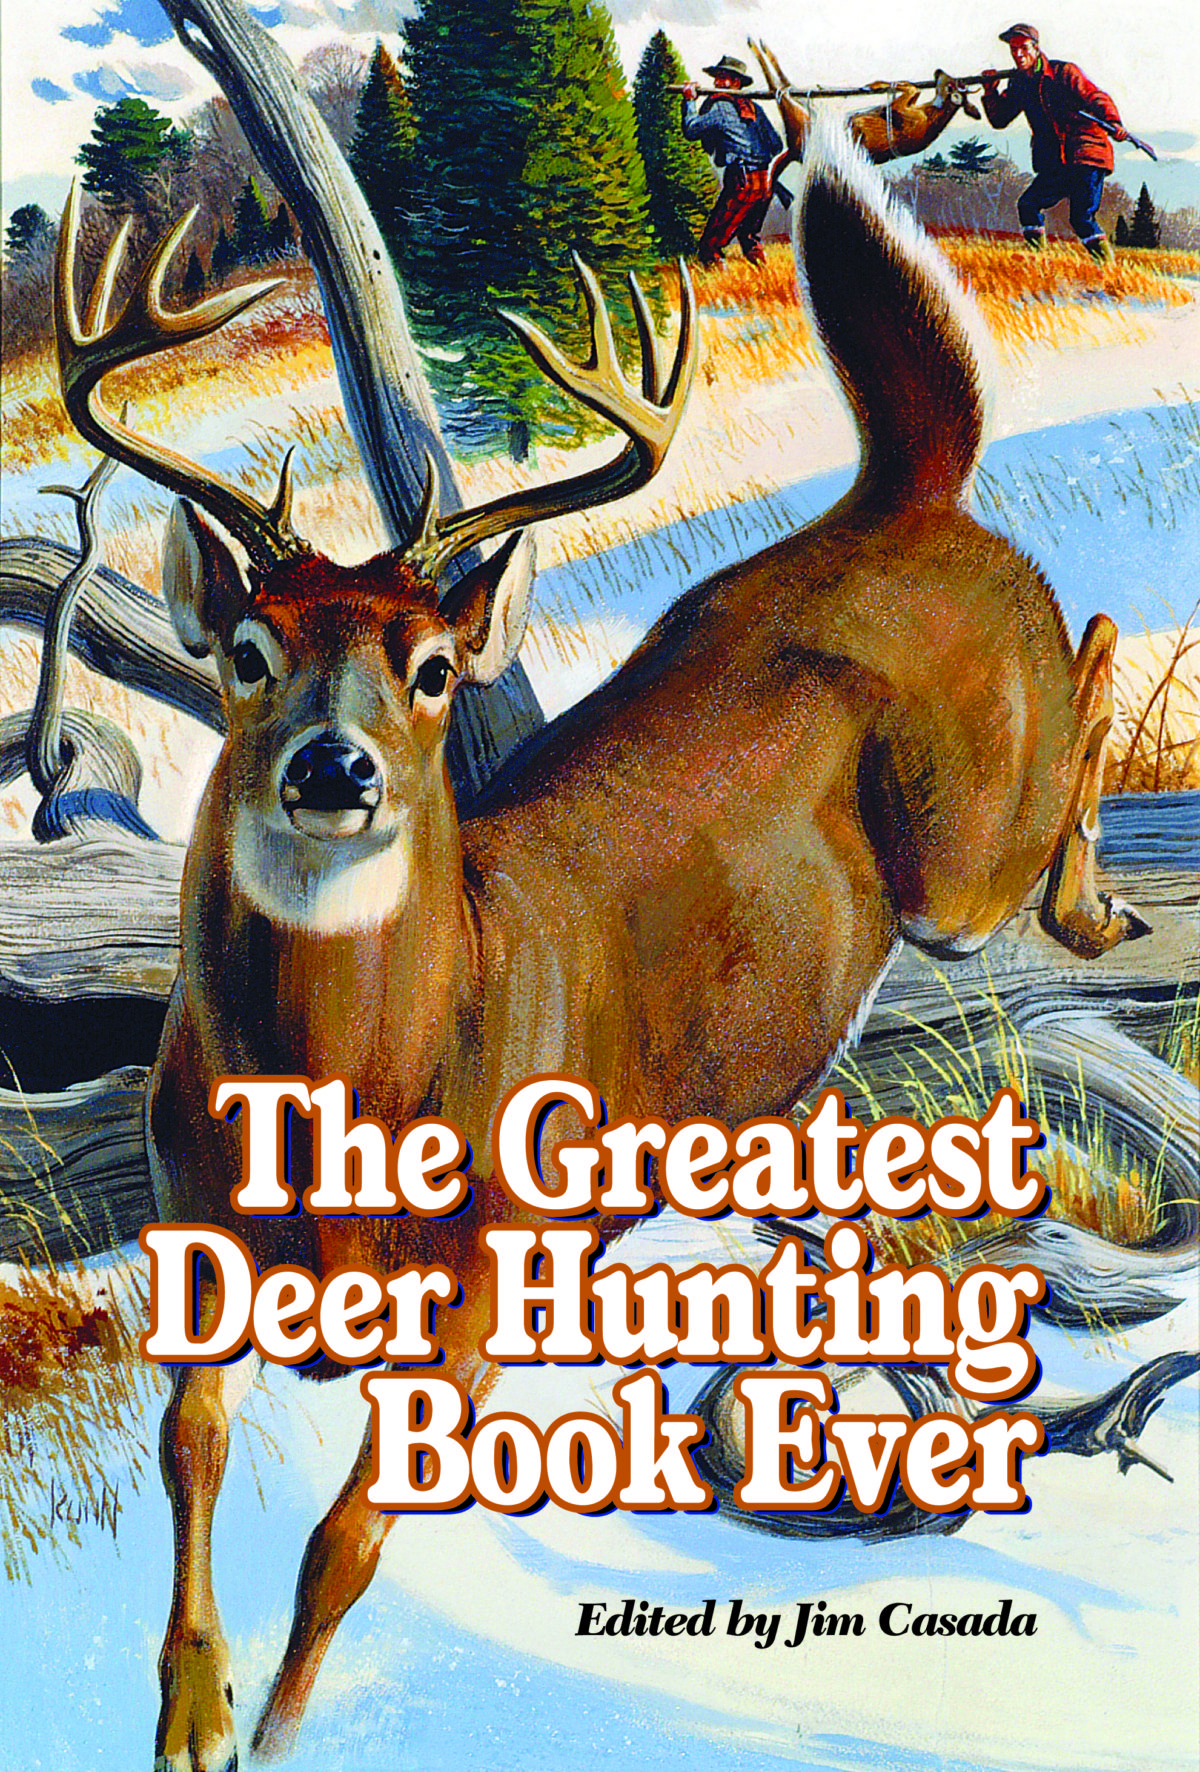 Sporting Classics releases new deer hunting book edited by Jim Casada